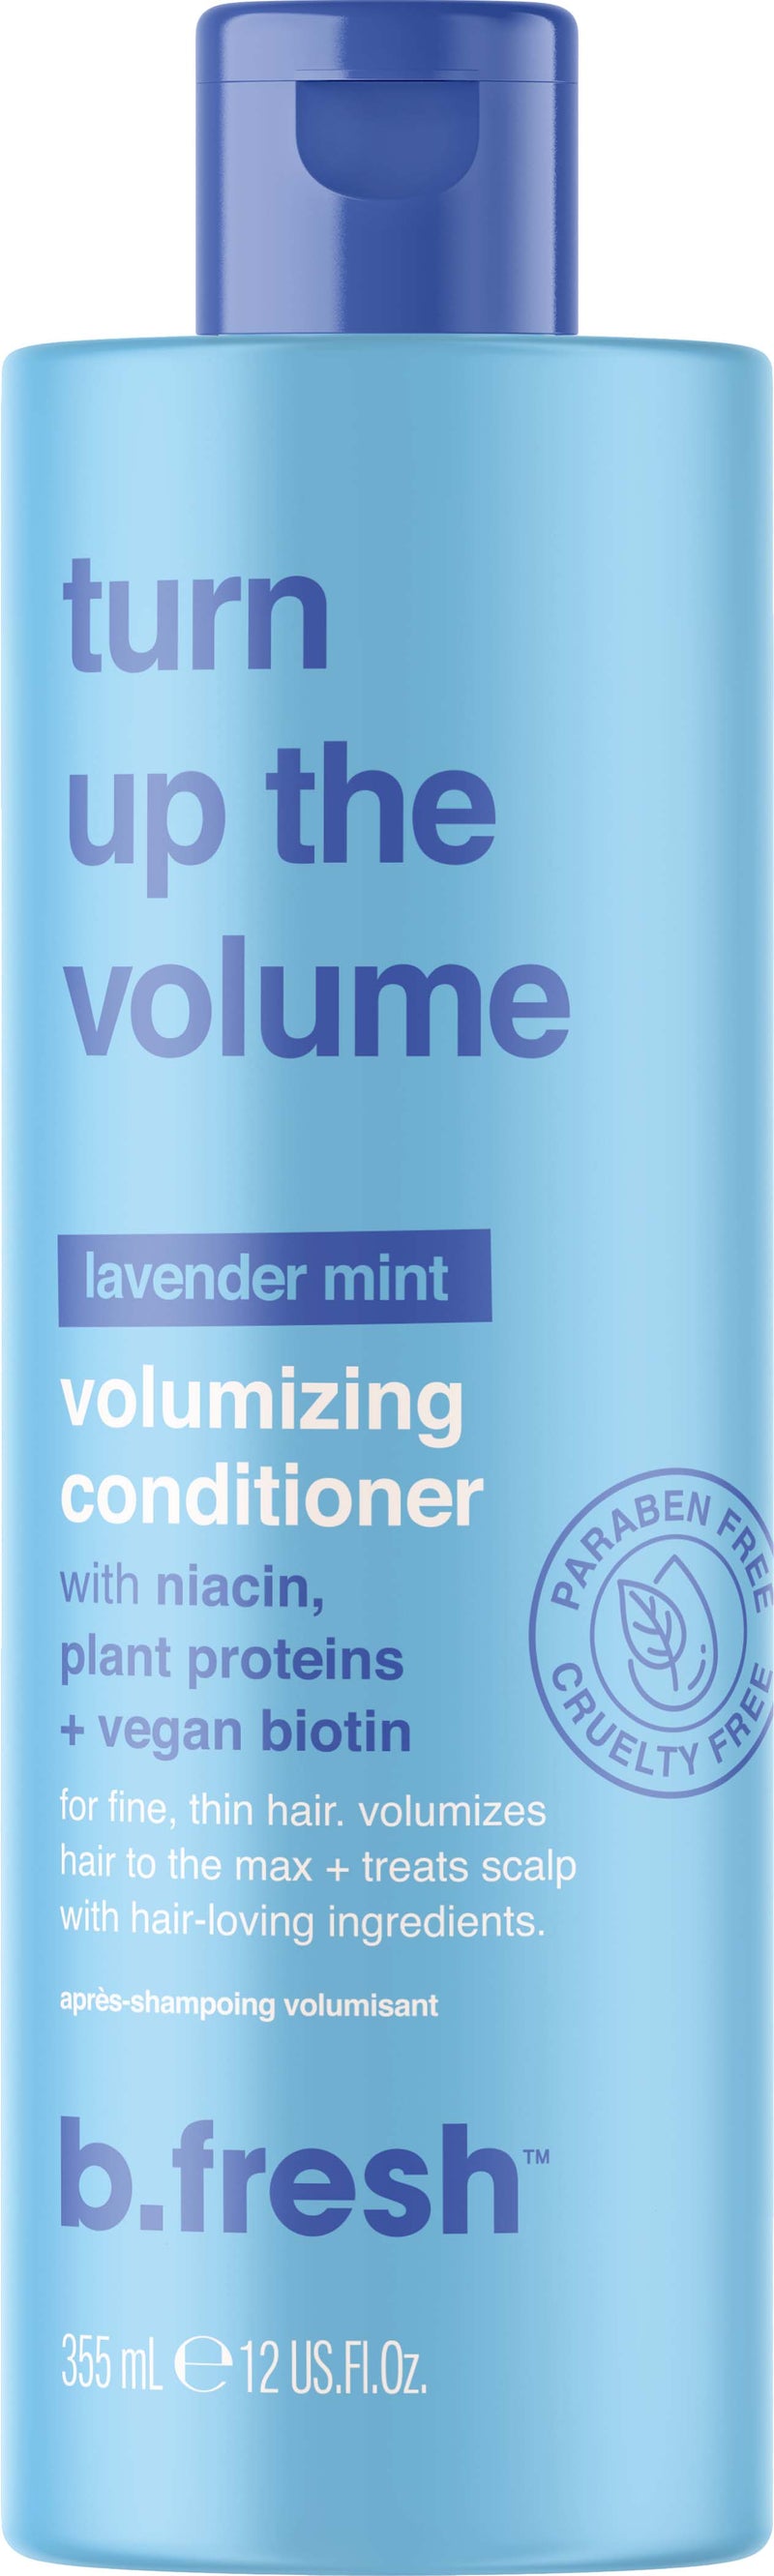 b.fresh Turn Up The Volume Volumizing Conditioner Volumizing conditioner, 355ml